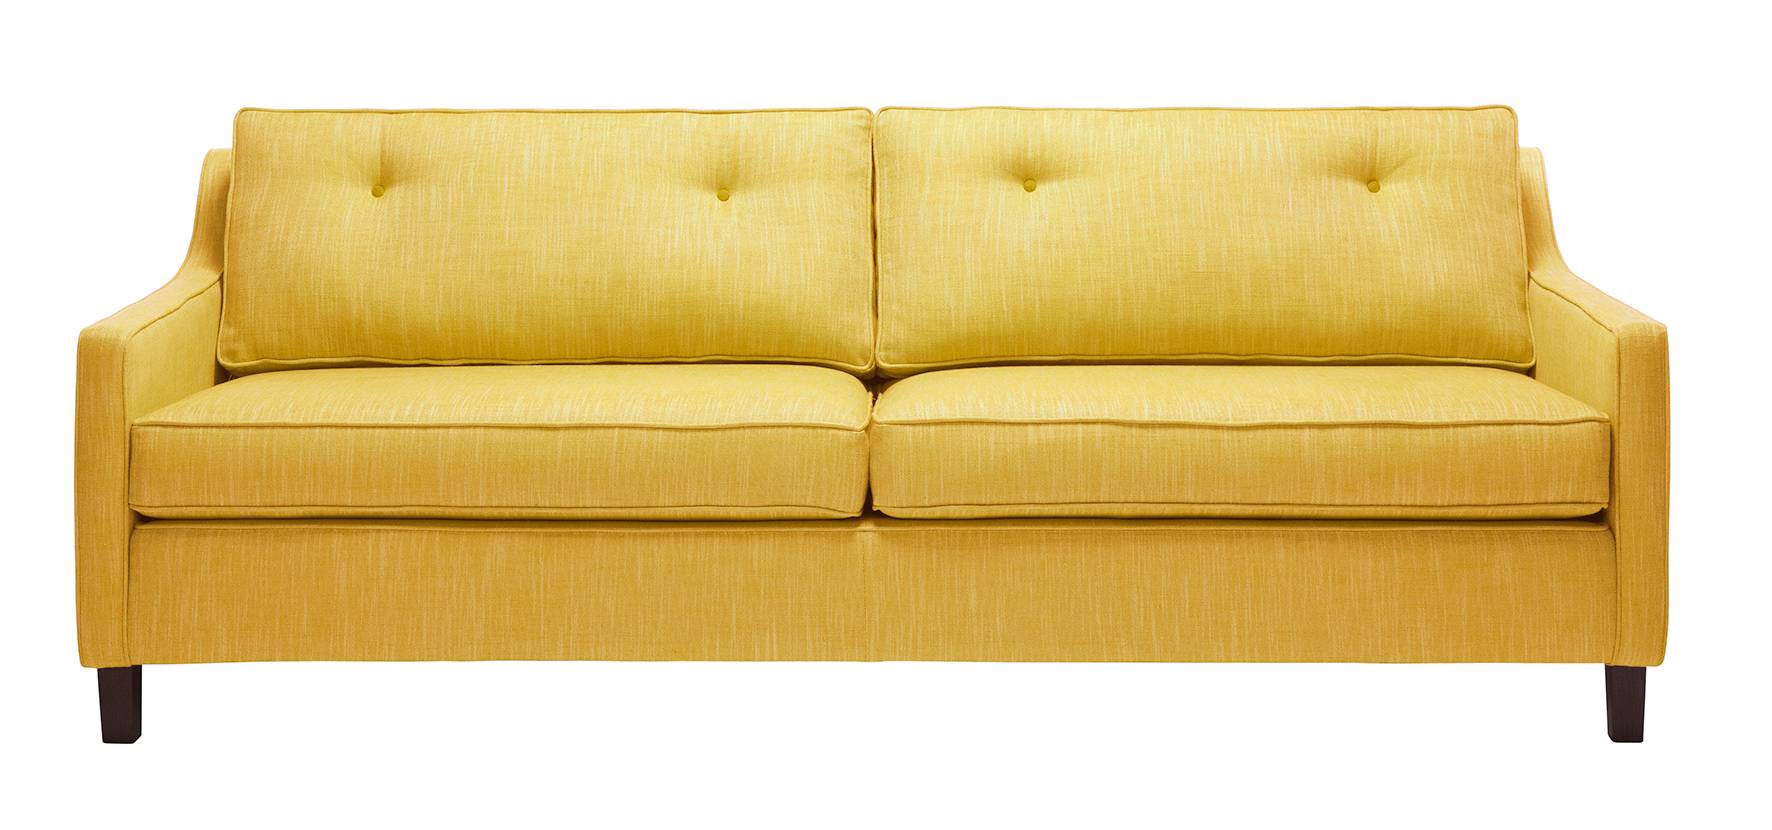 David Cameron's Yellow Sofa